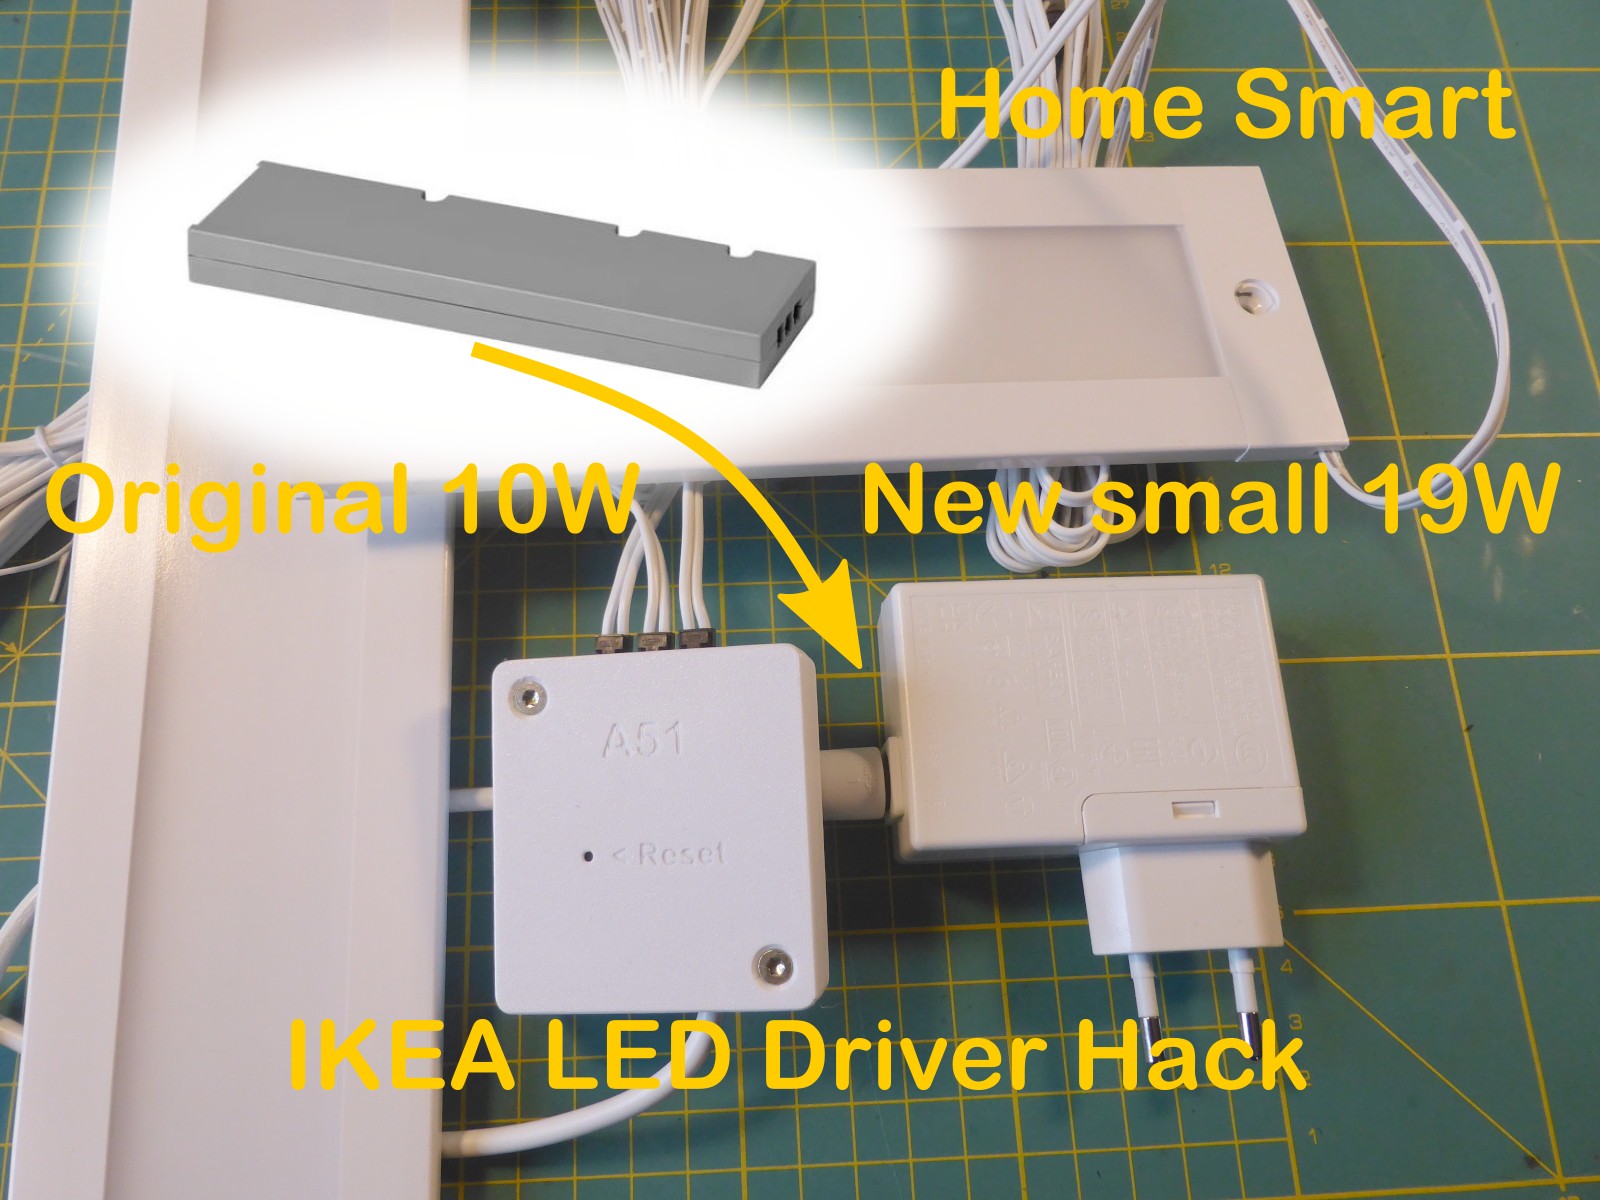 Enclosure for Smart LED Tradfri driver, IKEA Hack